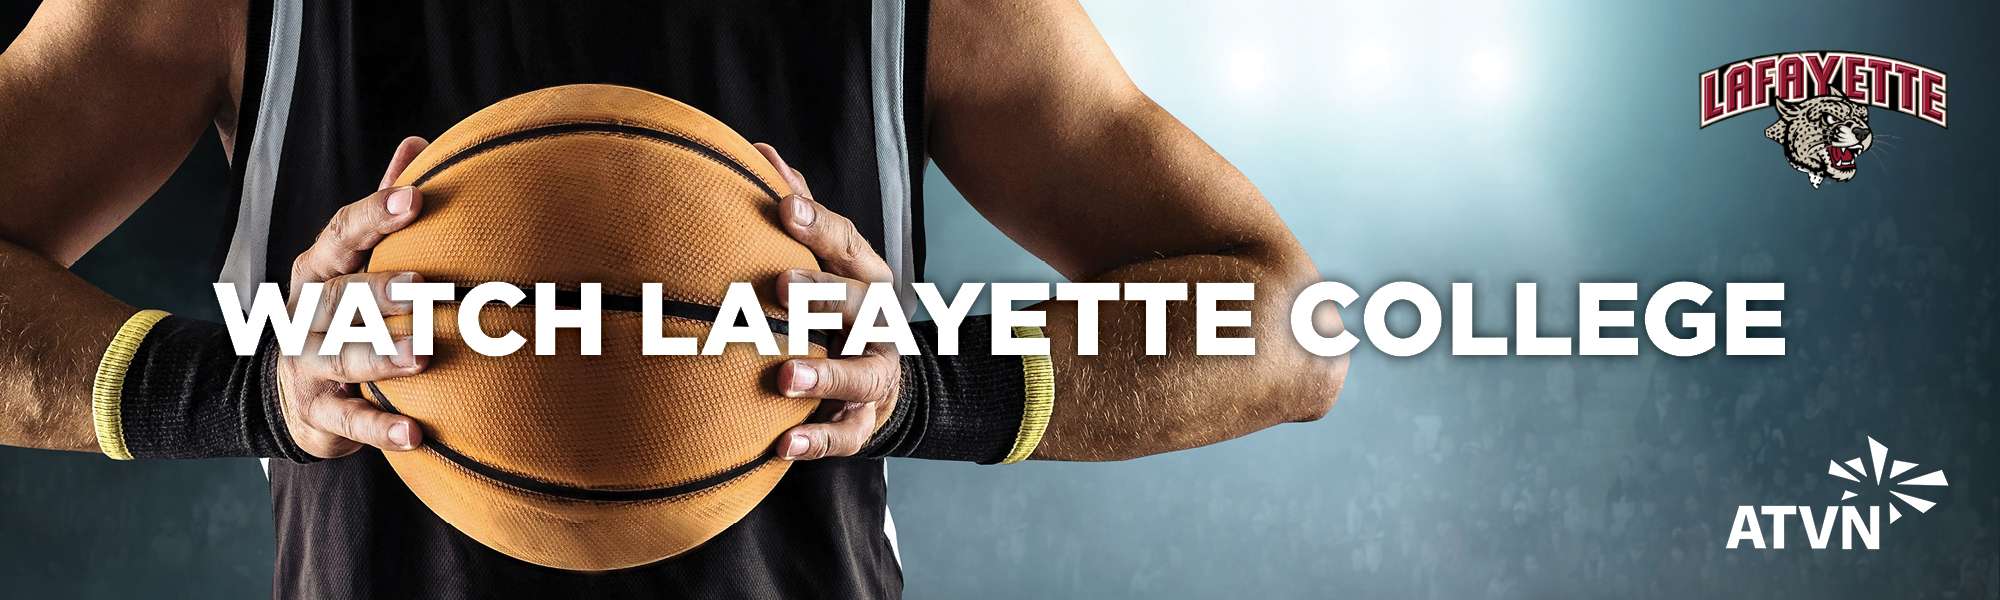 Watch Lafayette college basketball on ATVN